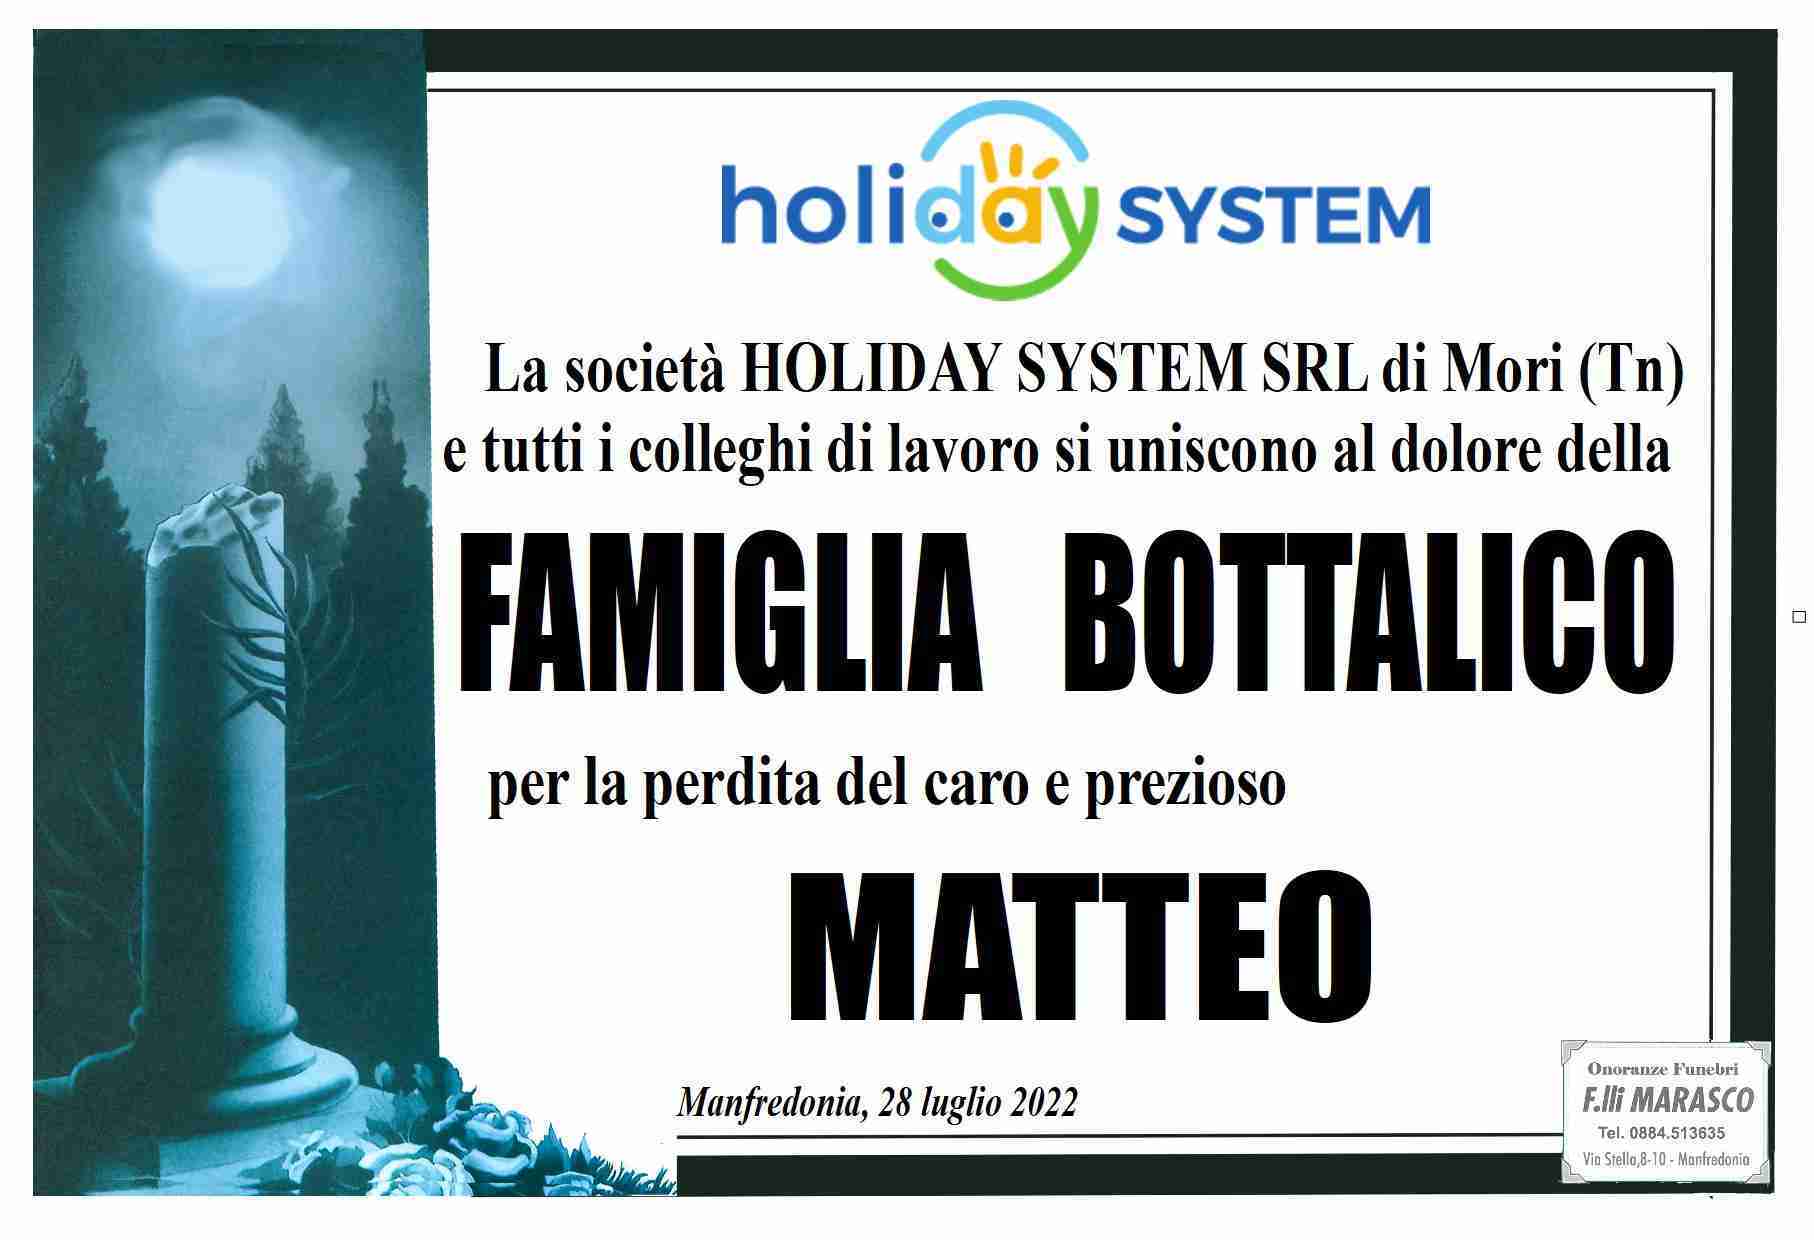 Matteo Bottalico